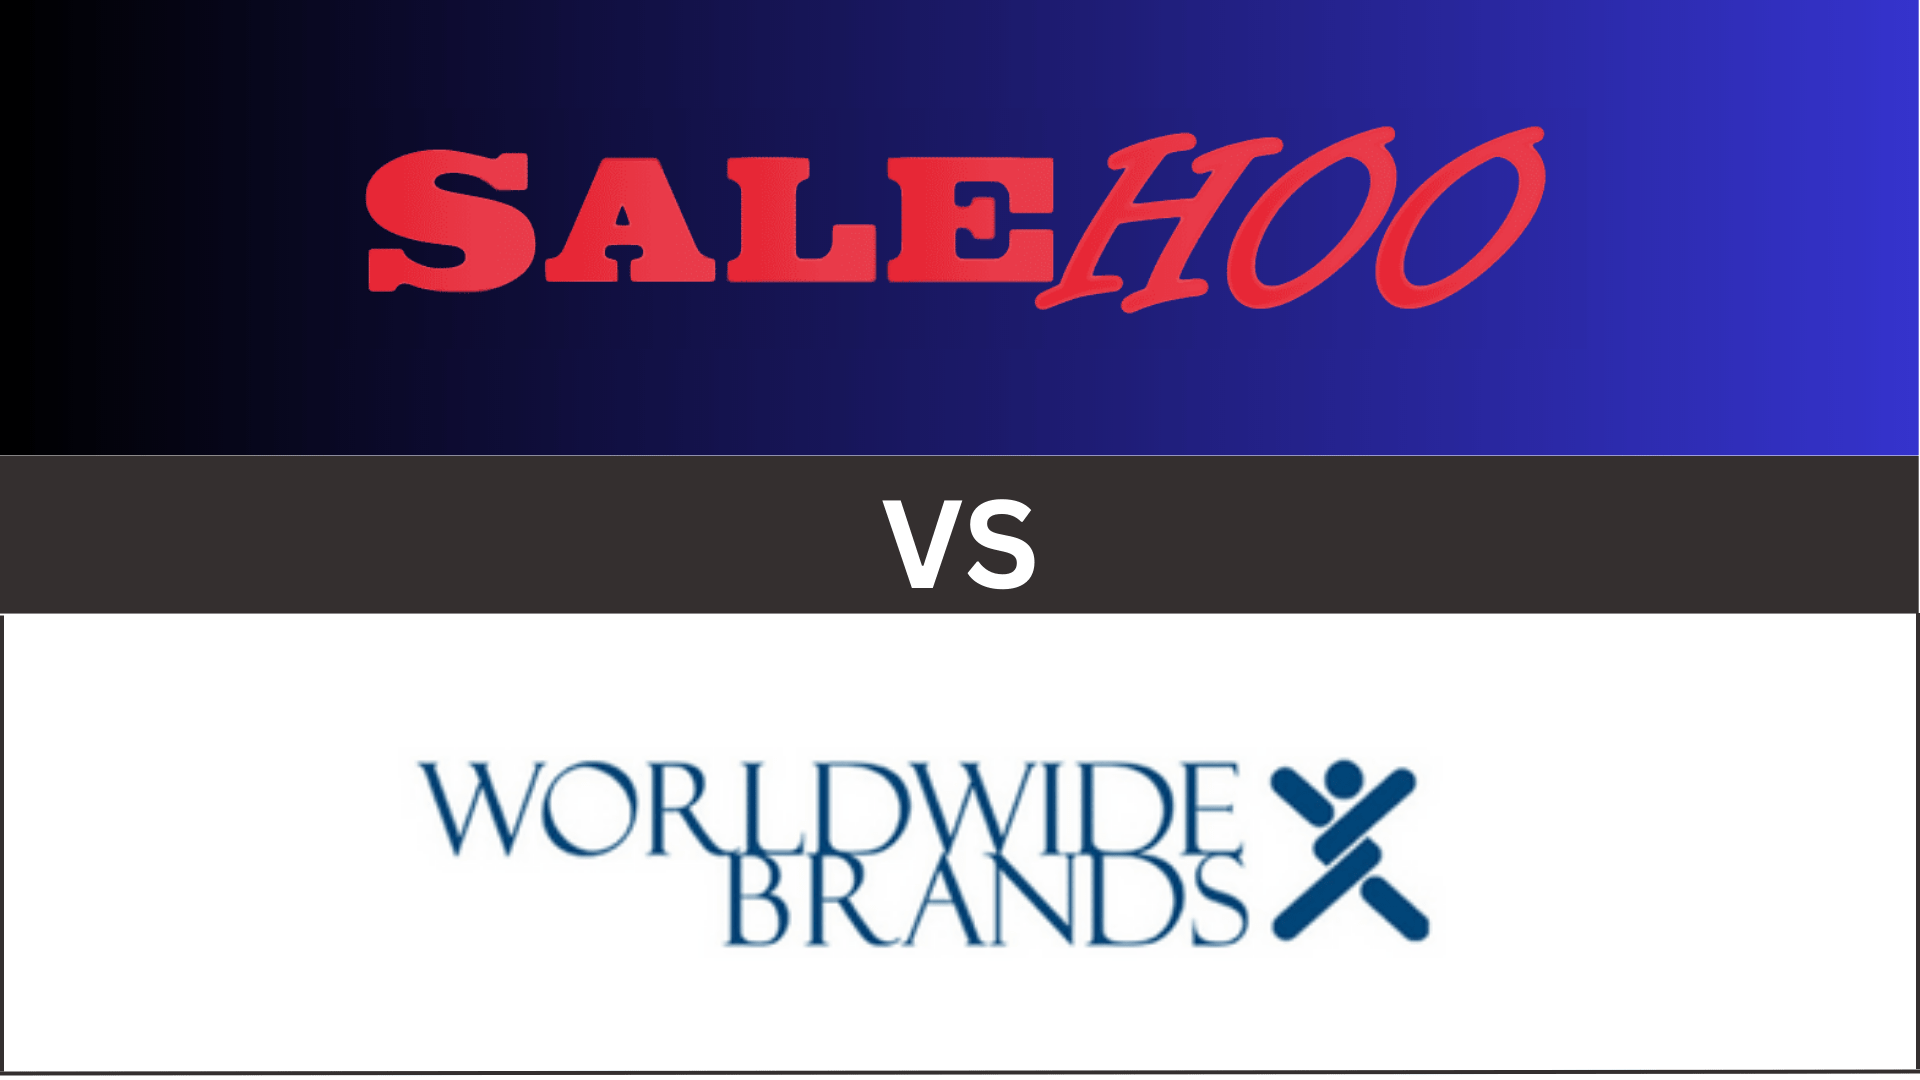 SaleHoo Vs Worldwide Brands: Which Offers Better Value?